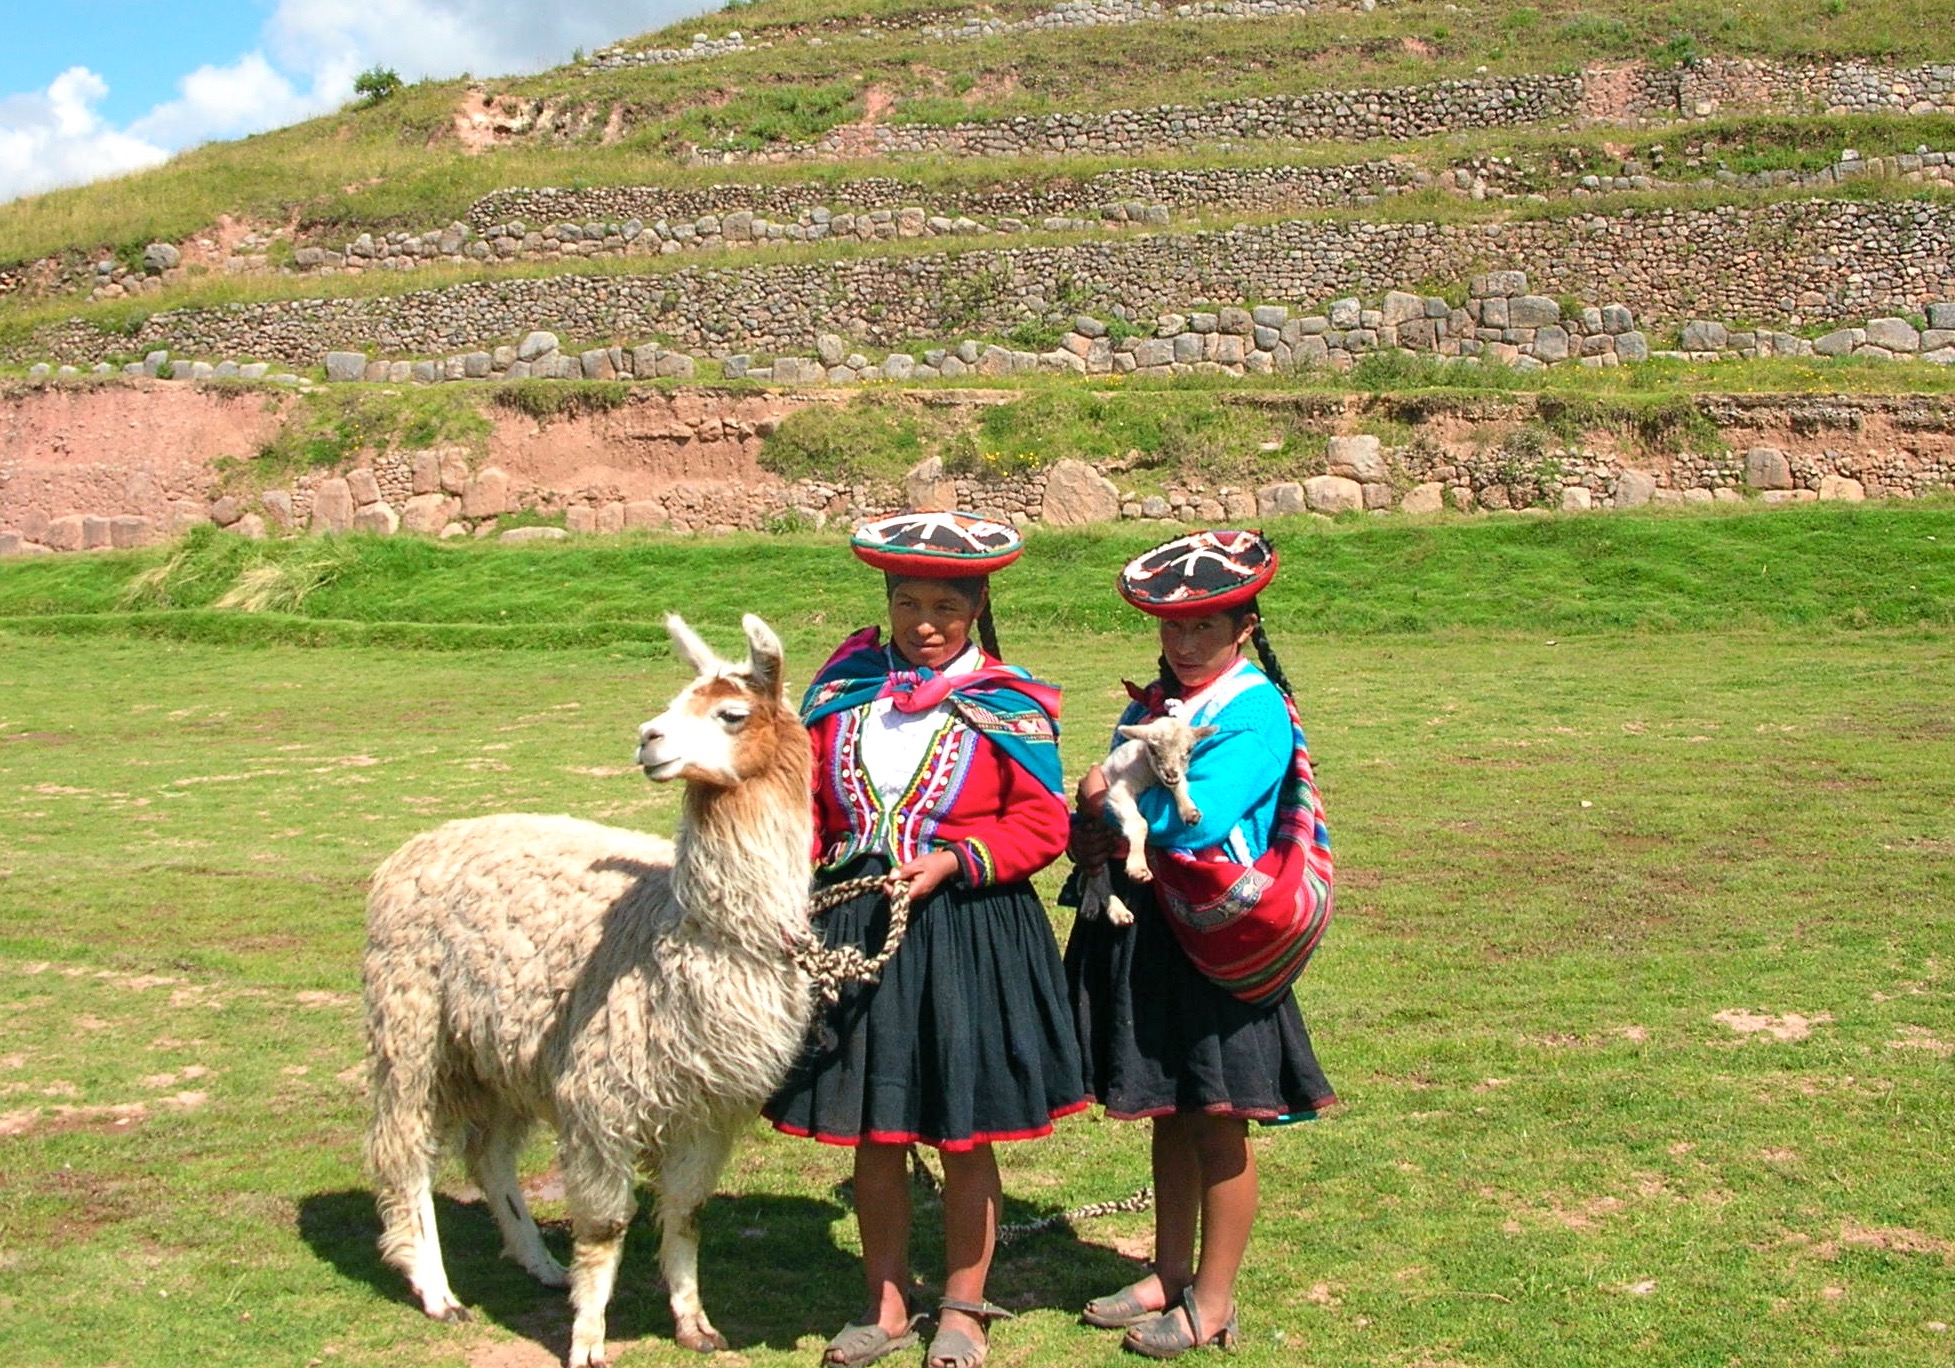 Inca women tend to their llama. Photo by Marla Norman.